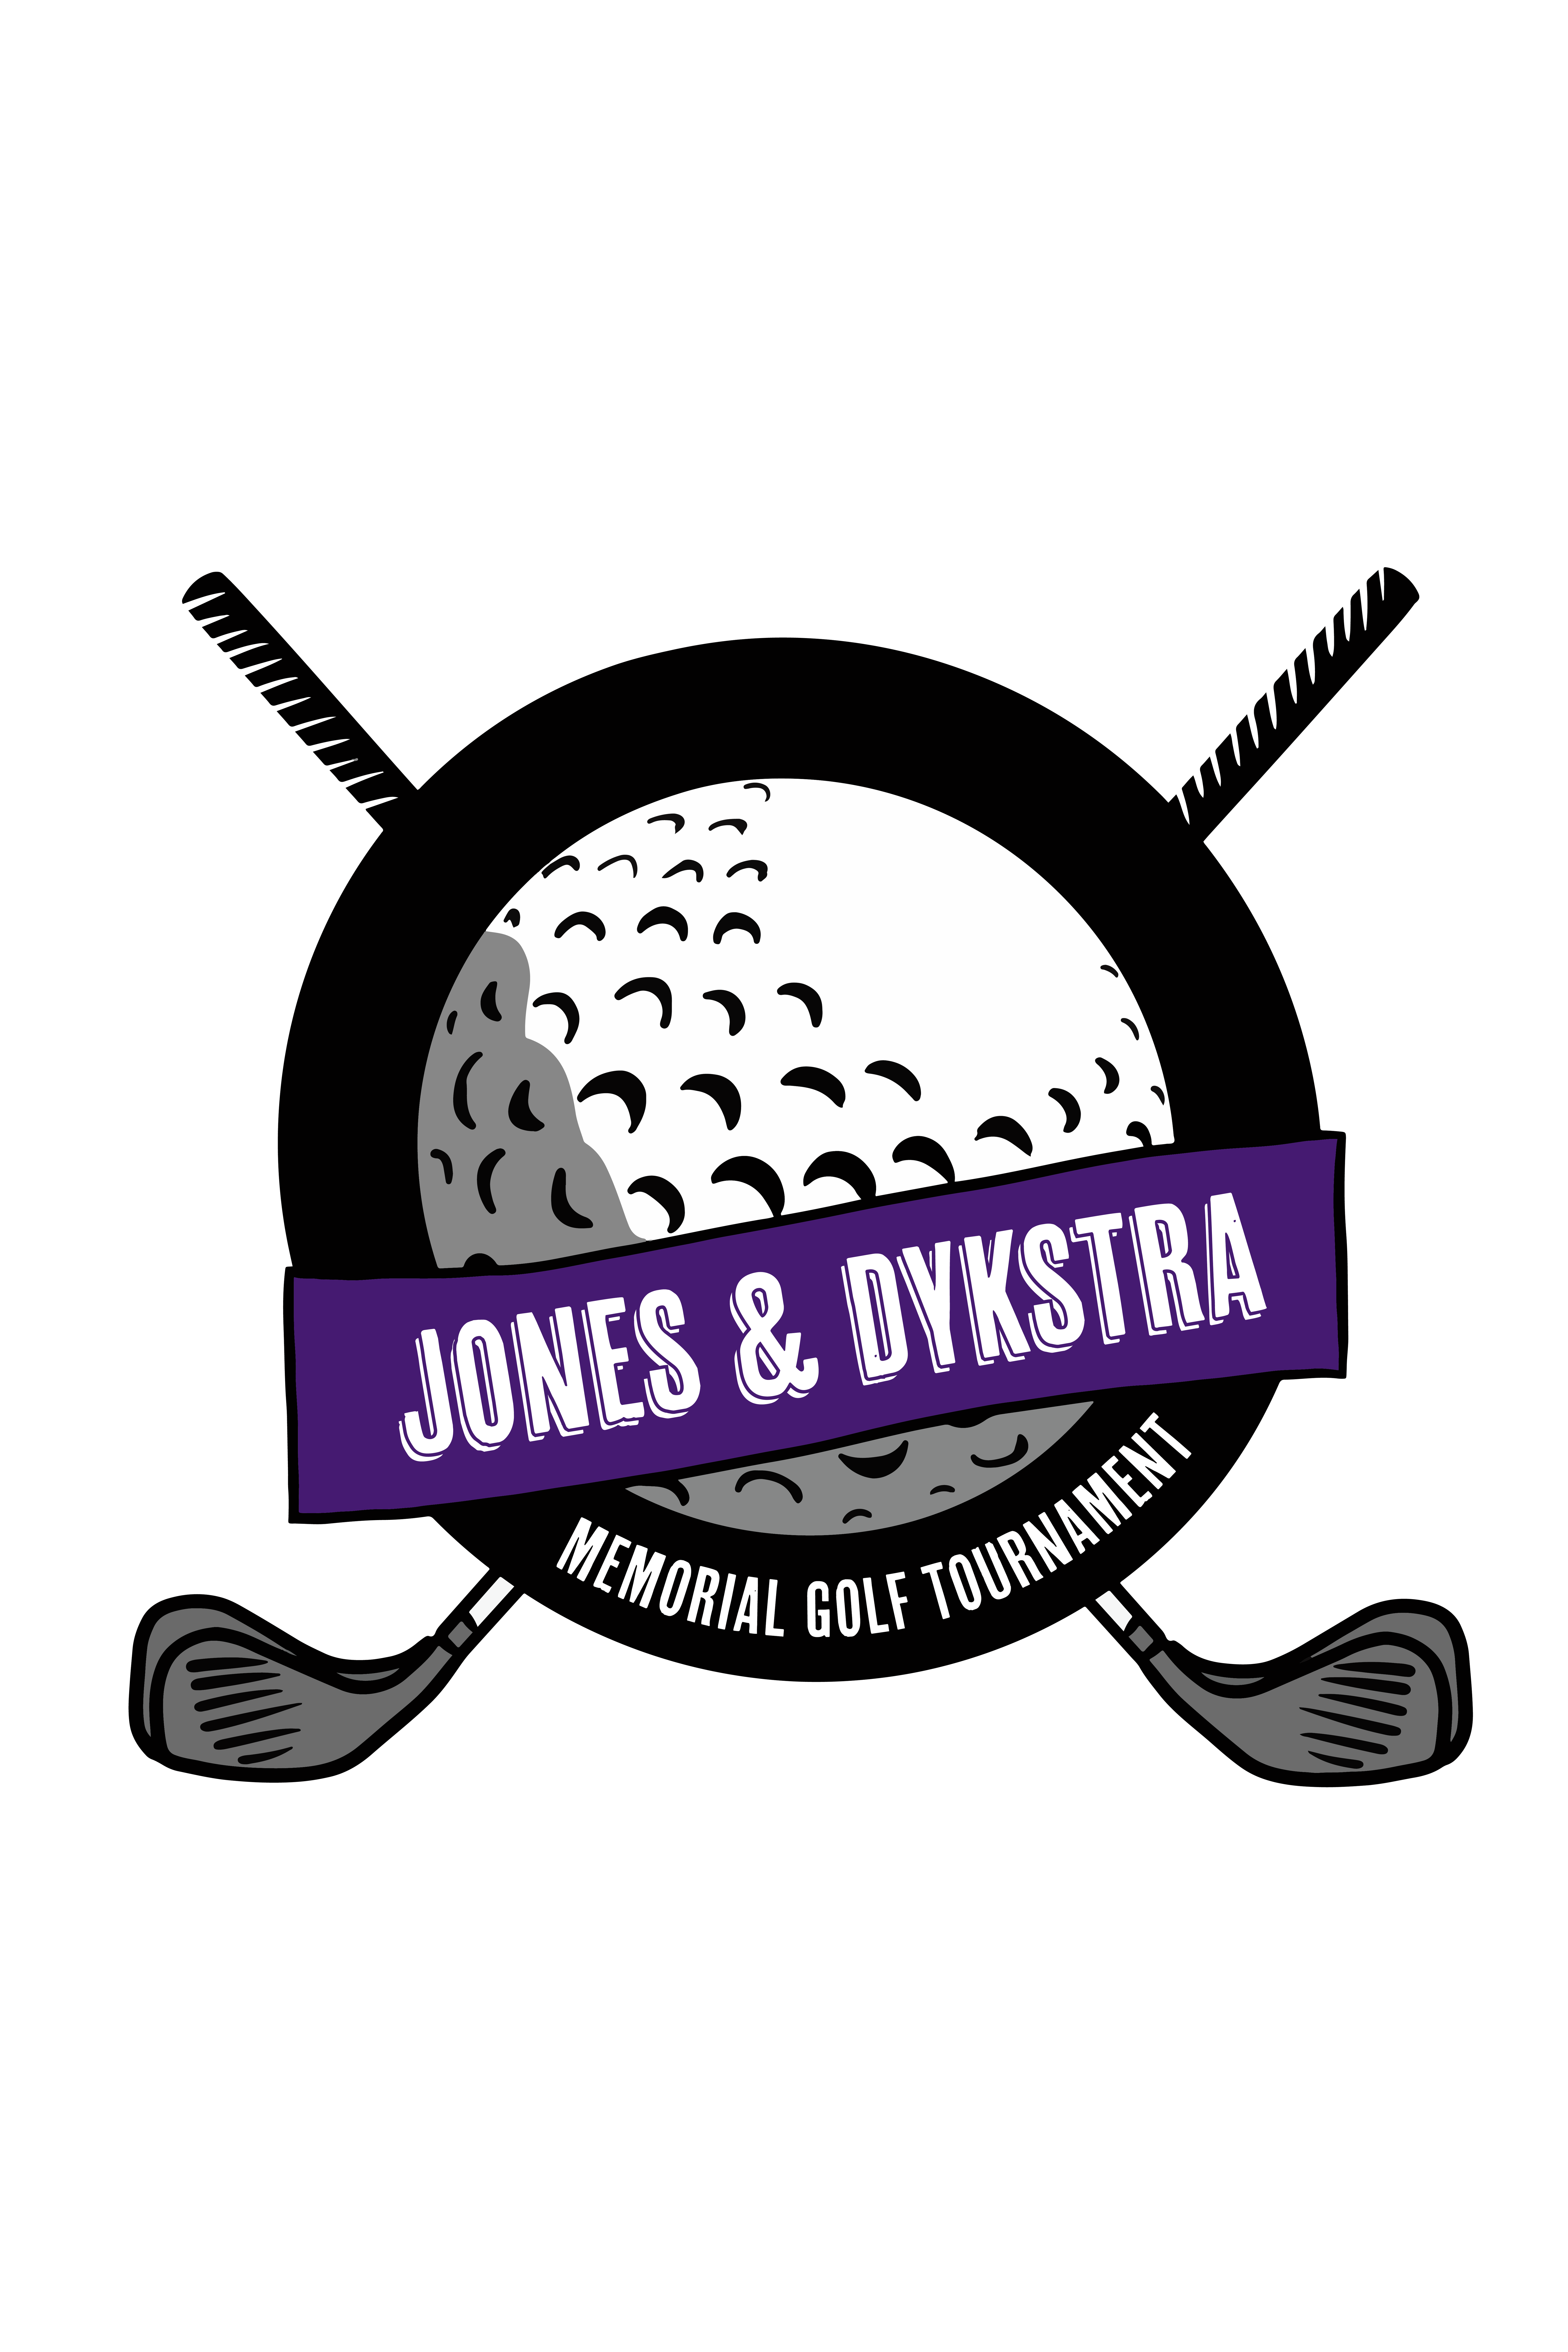 The Jones/Dykstra Memorial Golf Tournament